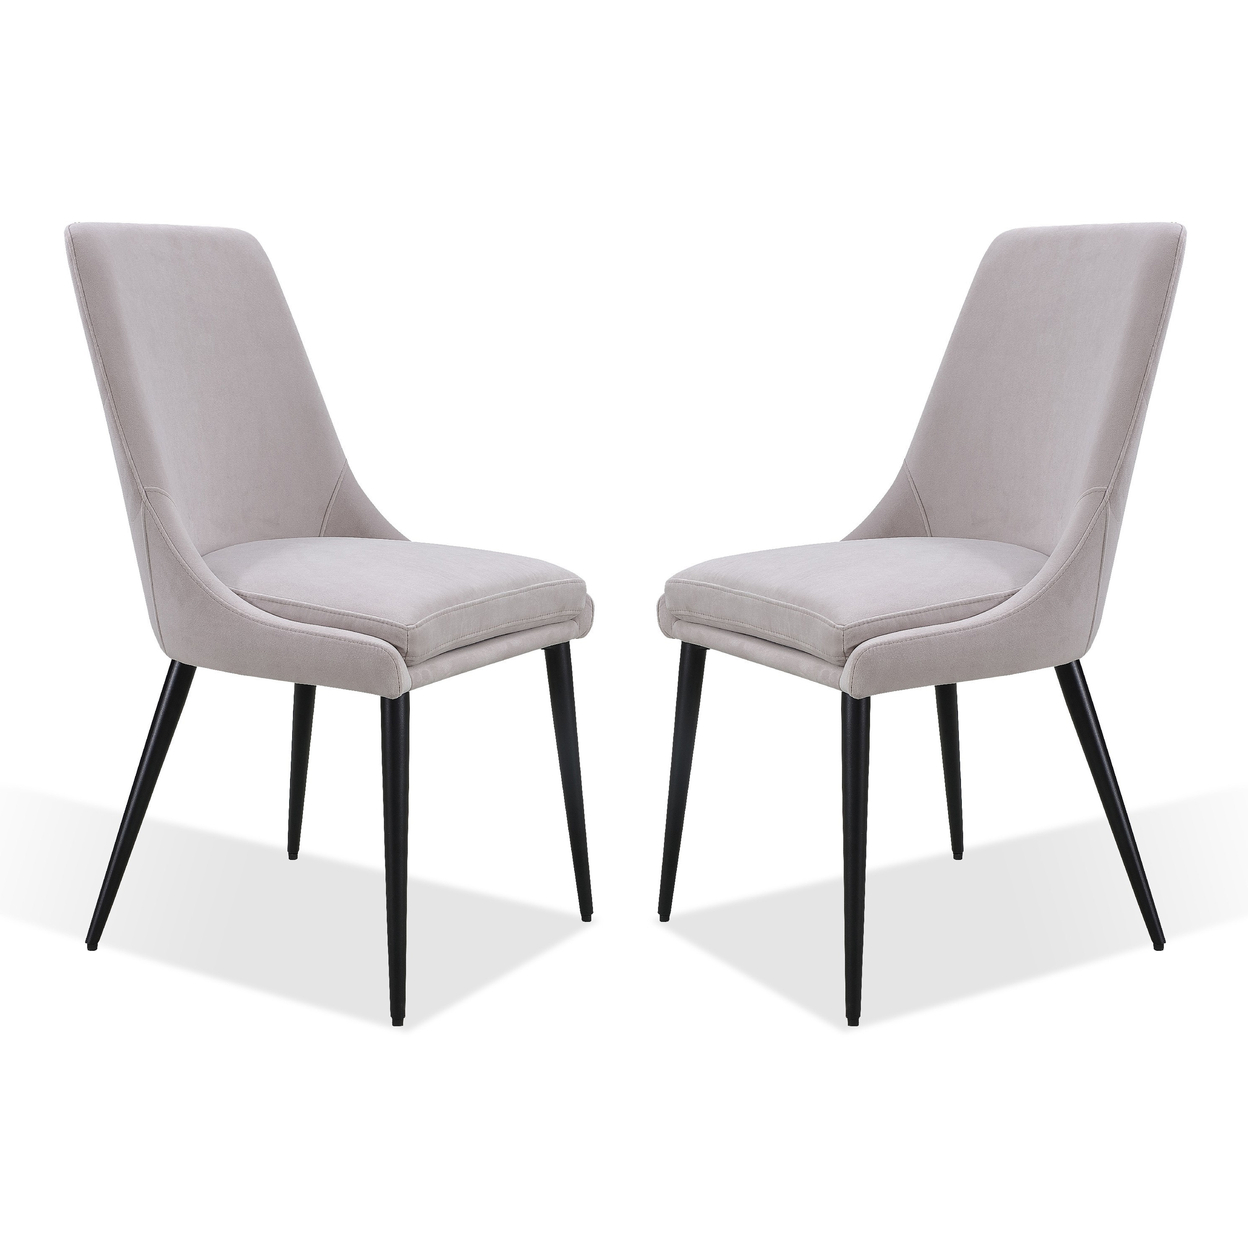 Lam 37 Inch Upholstered Dining Chair, Sleek Metal Legs, Set Of 2, Soft Gray- Saltoro Sherpi